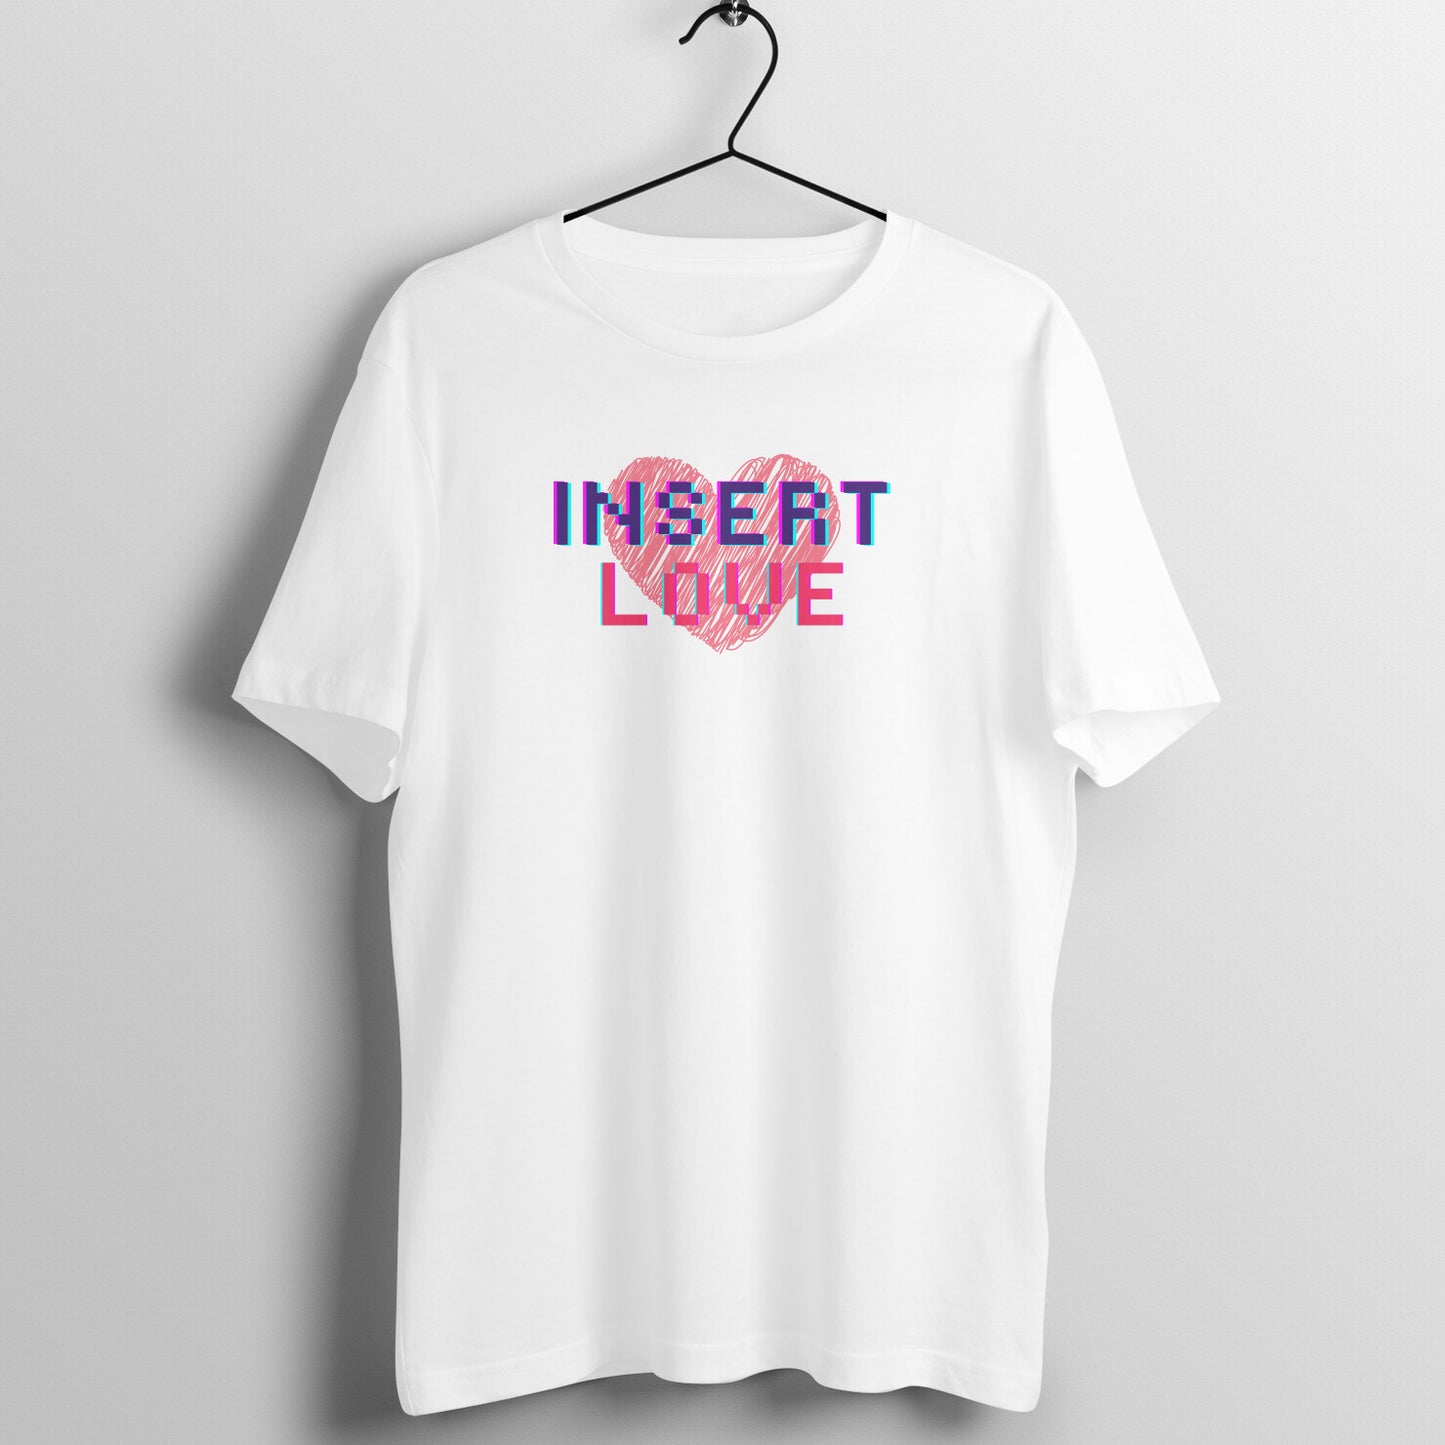 Insert Love Unisex T-Shirt